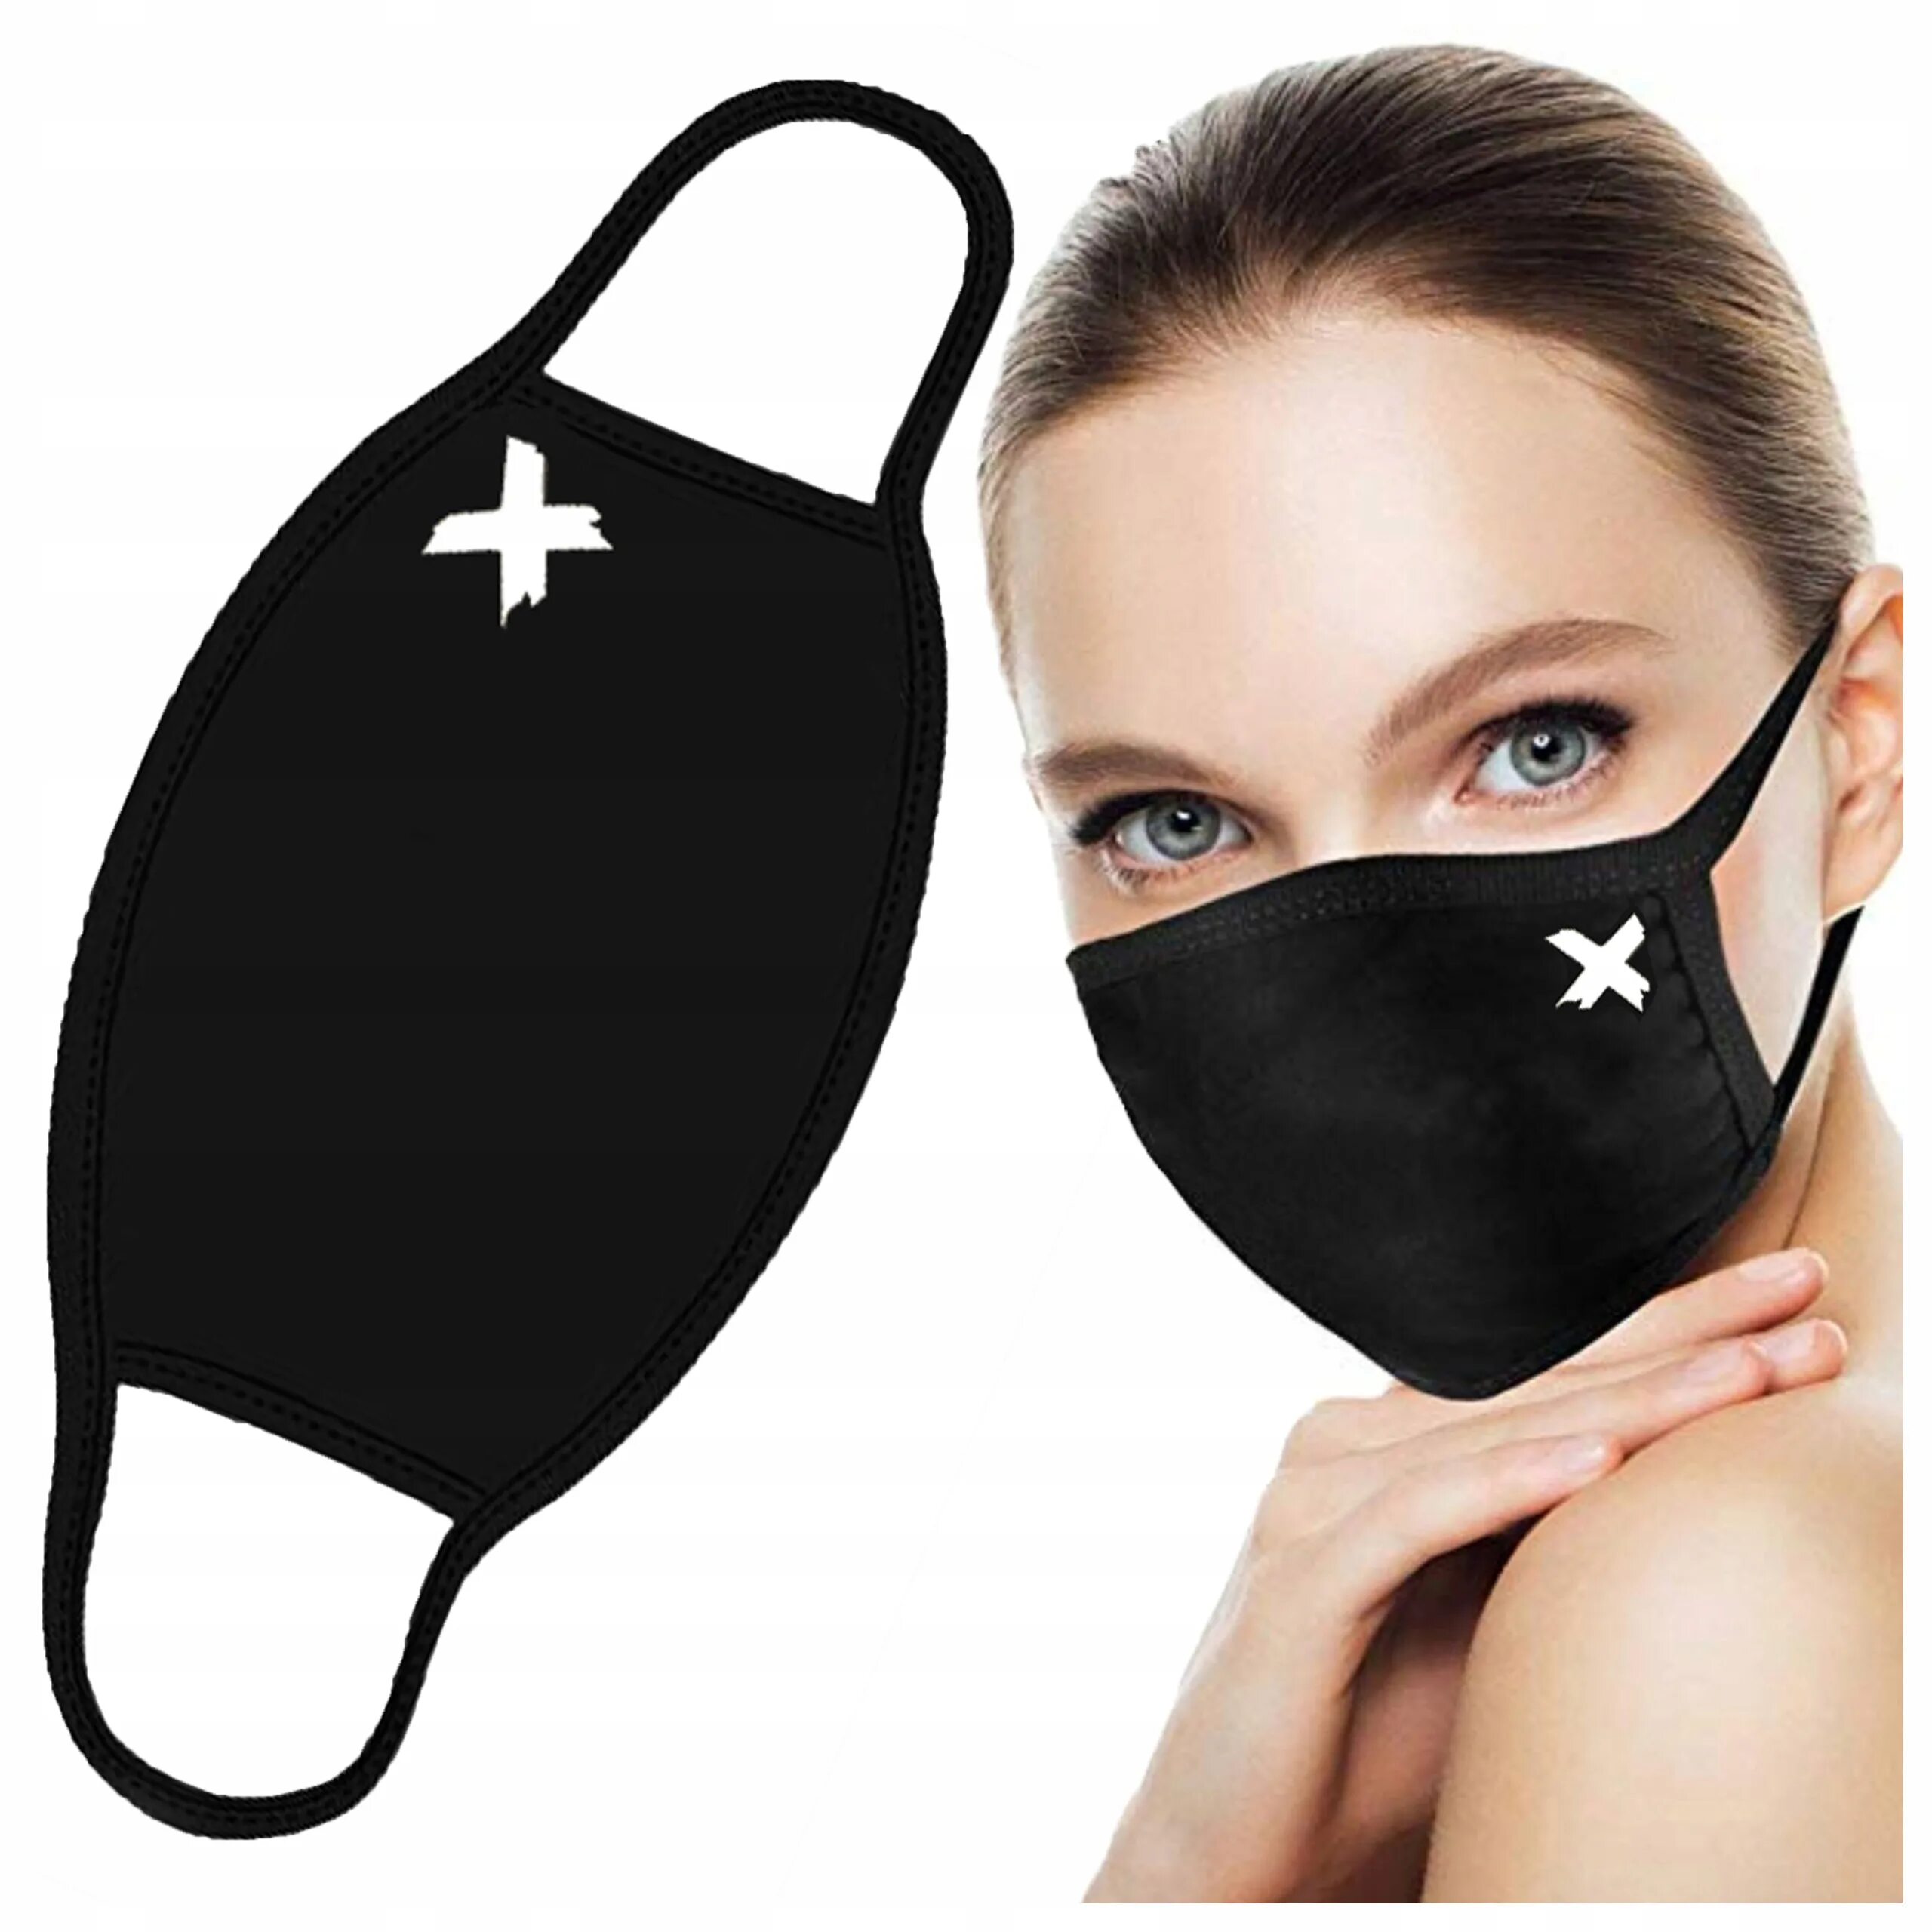 Черная многоразовая маска. Защитная маска для лица. Маска многоразовая черная. Маска многоразовая для лица. Маска для лица защитная многоразовая.